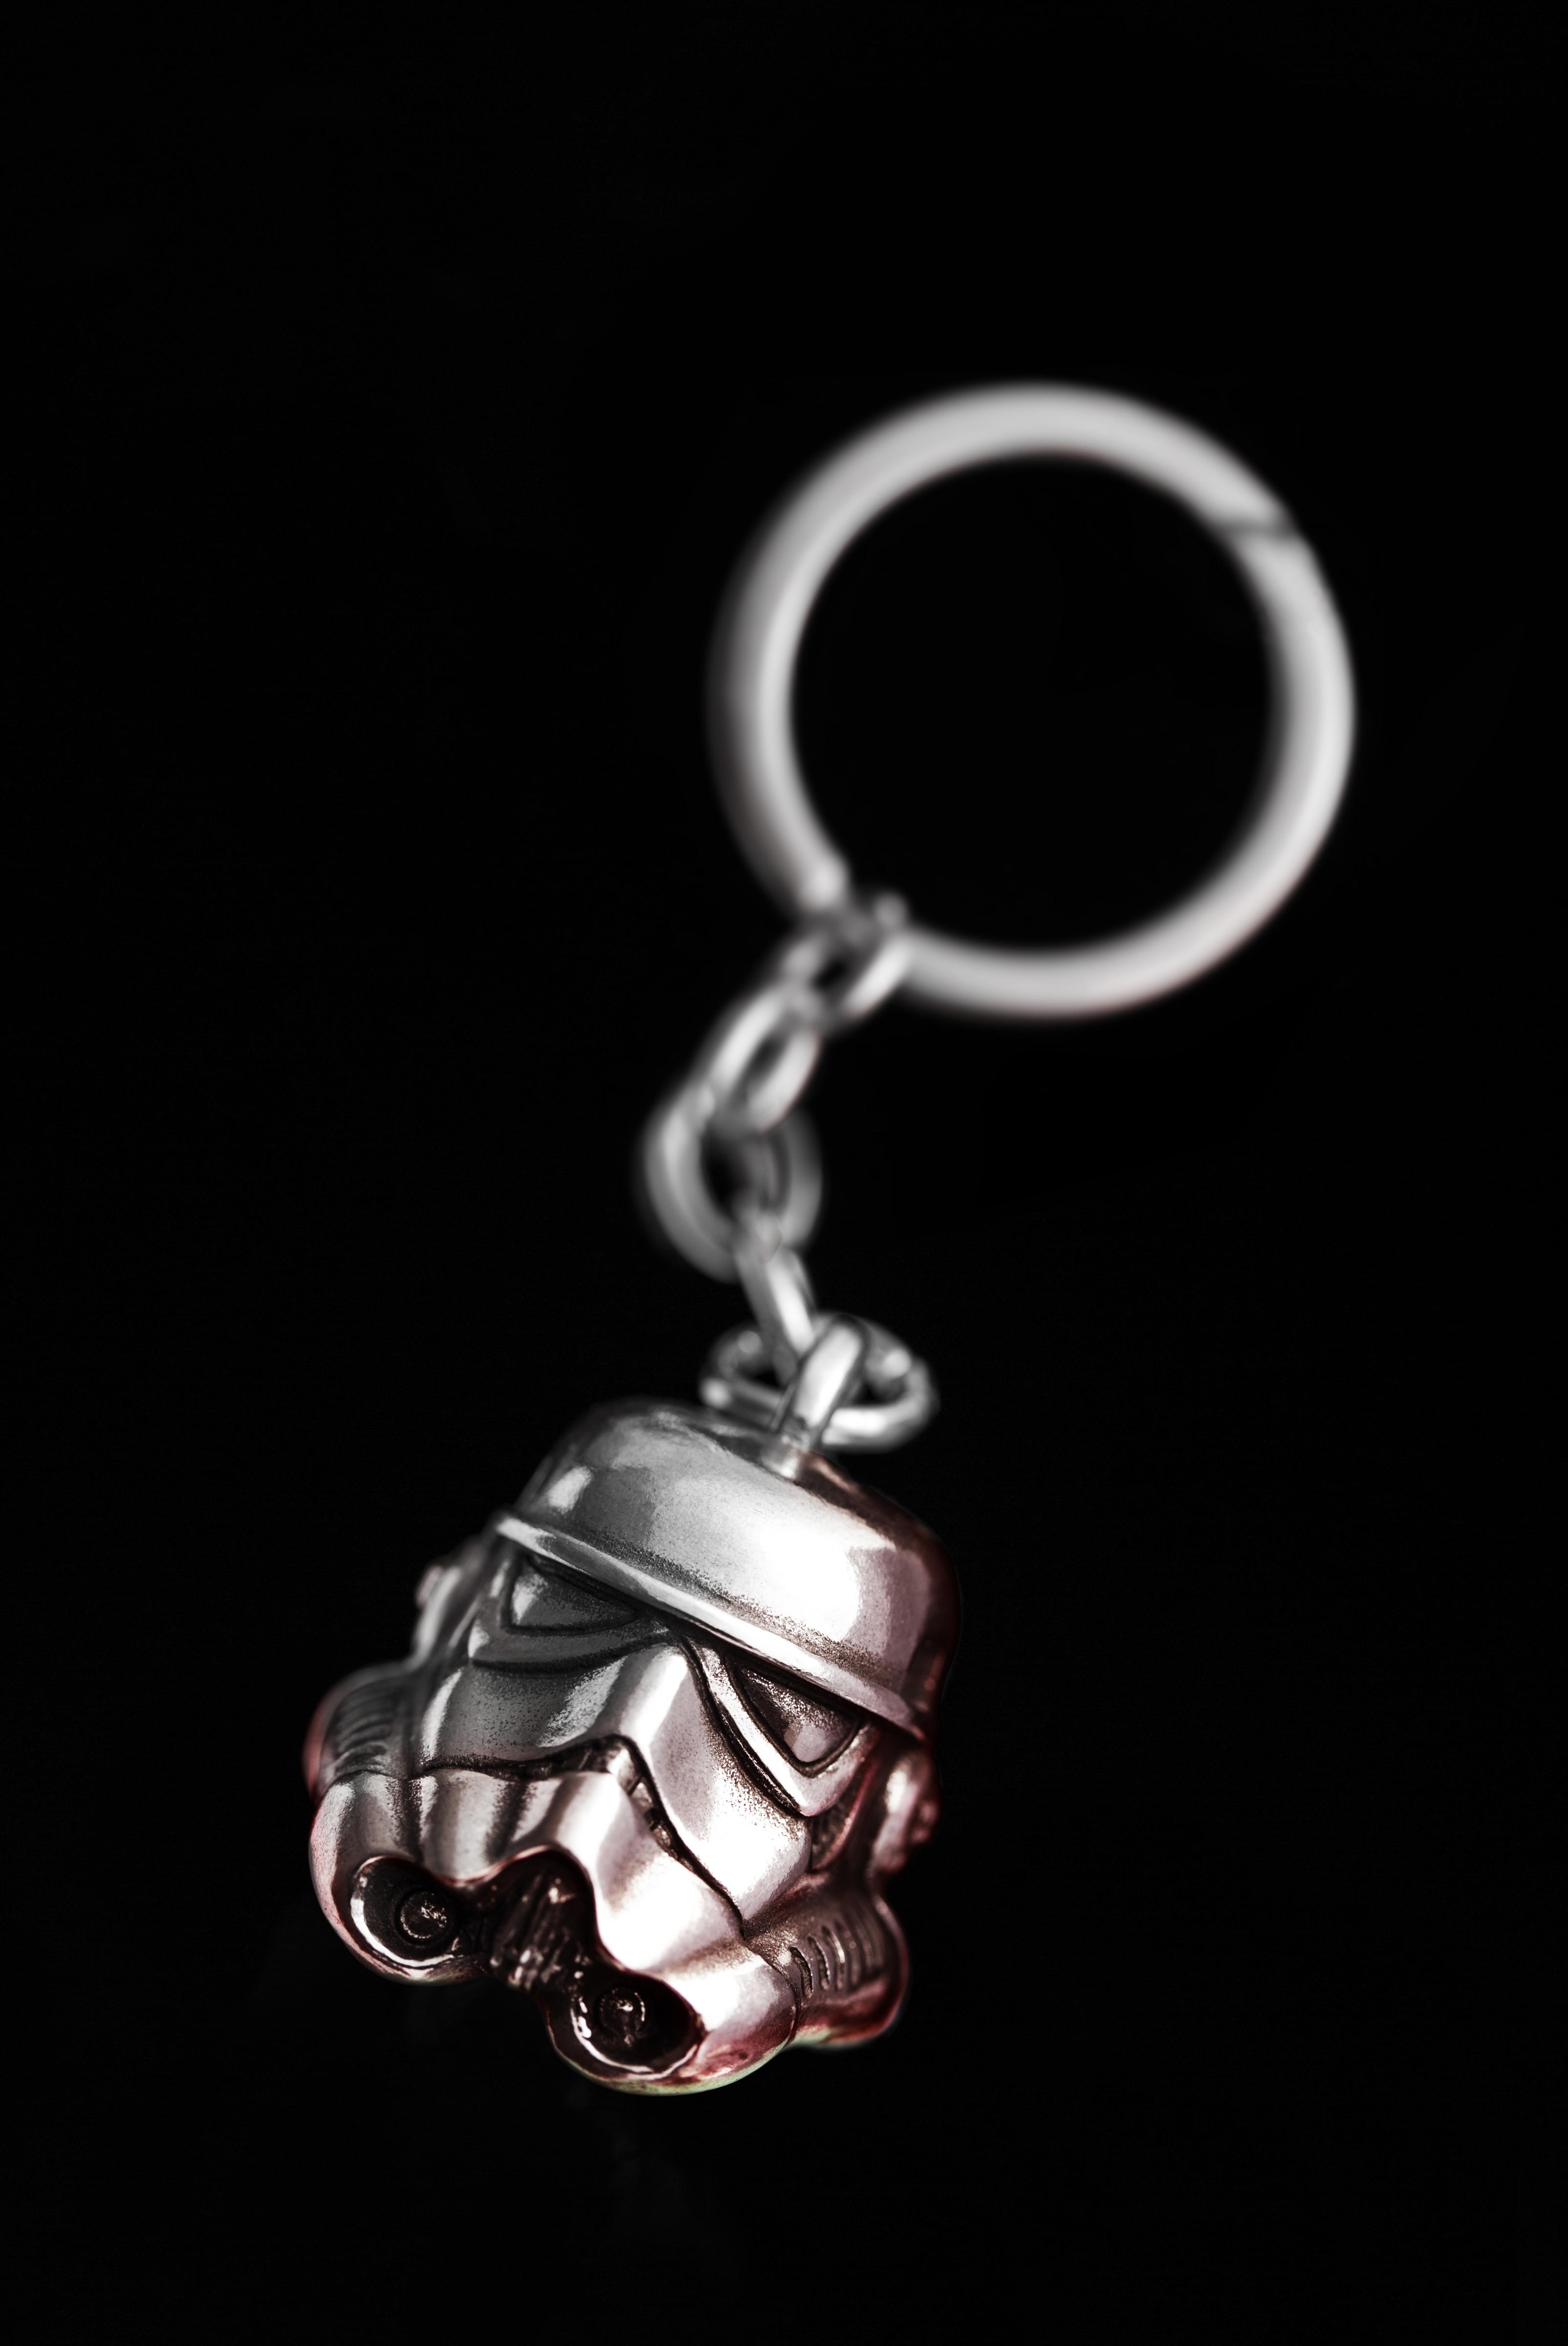 Royal Selangor Pewter Stormtrooper keychain